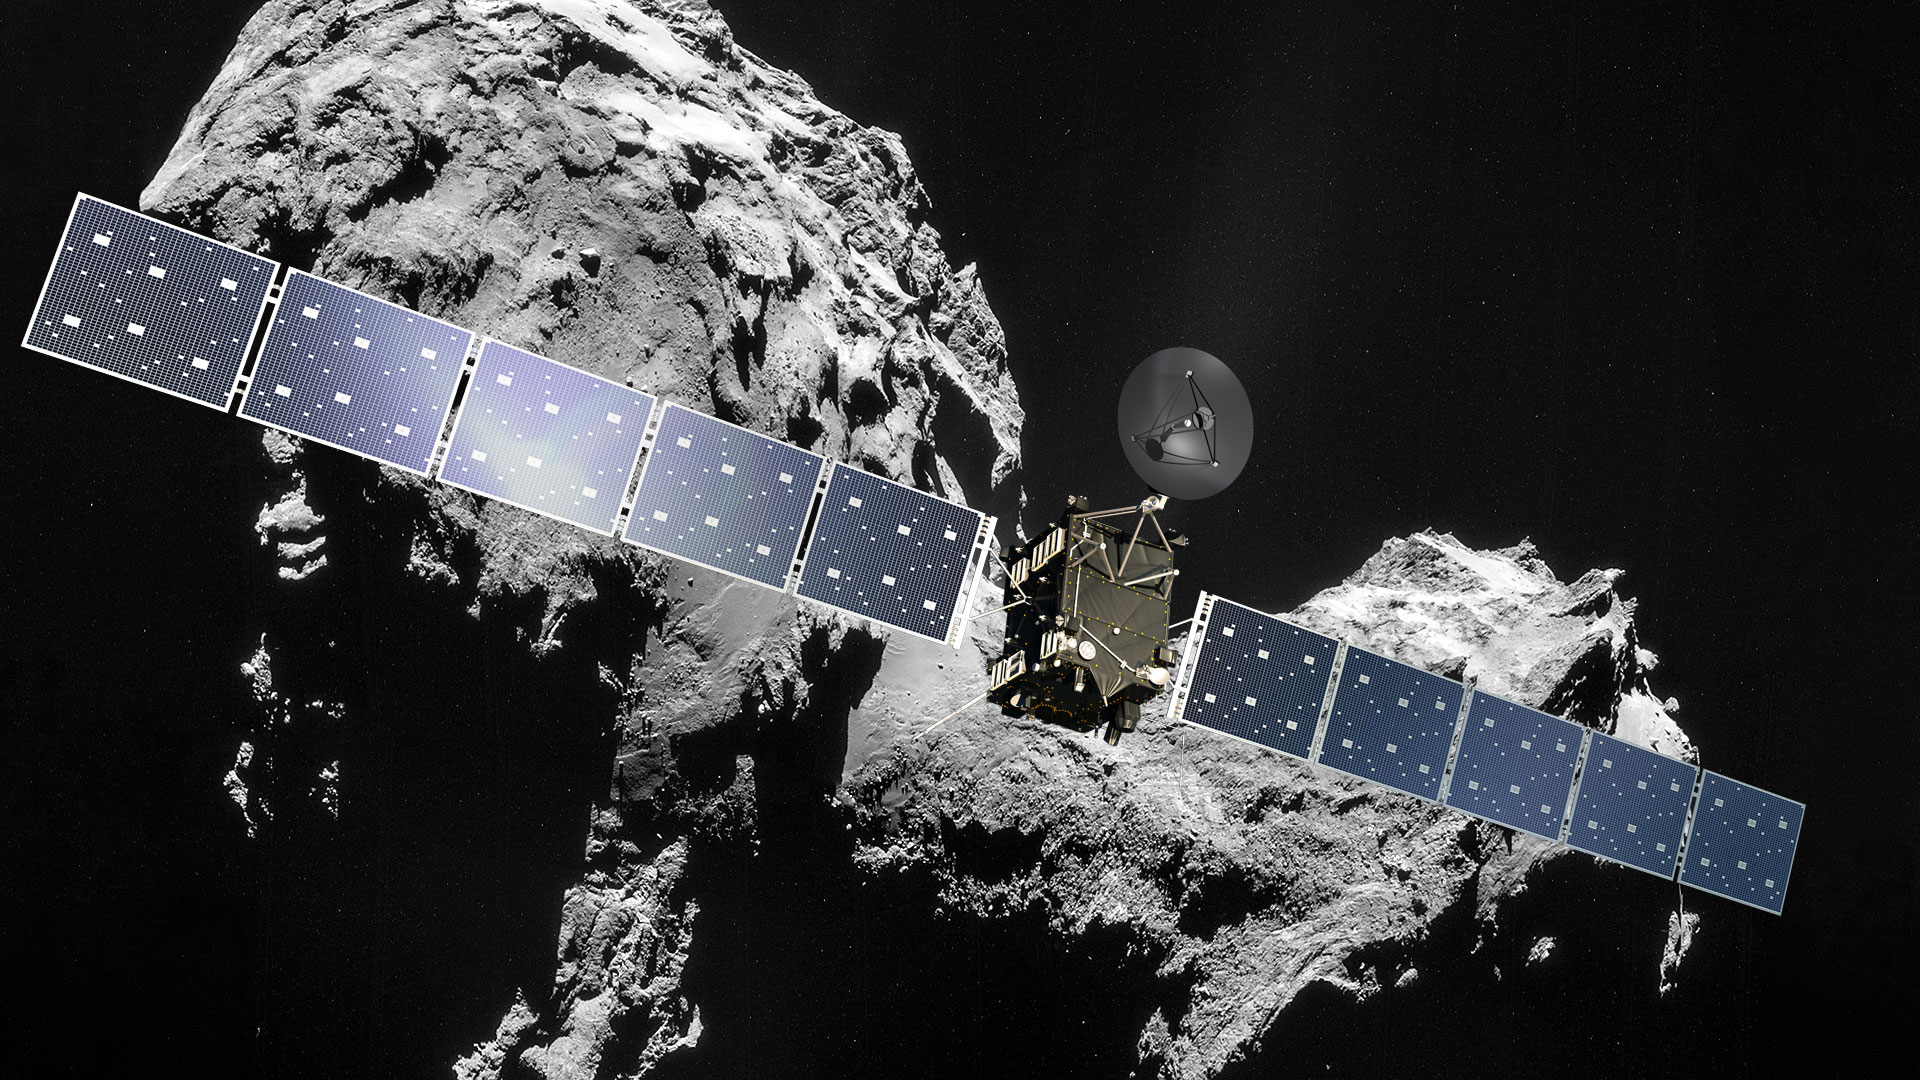 La sonde Rosetta en quête des origines de la vie